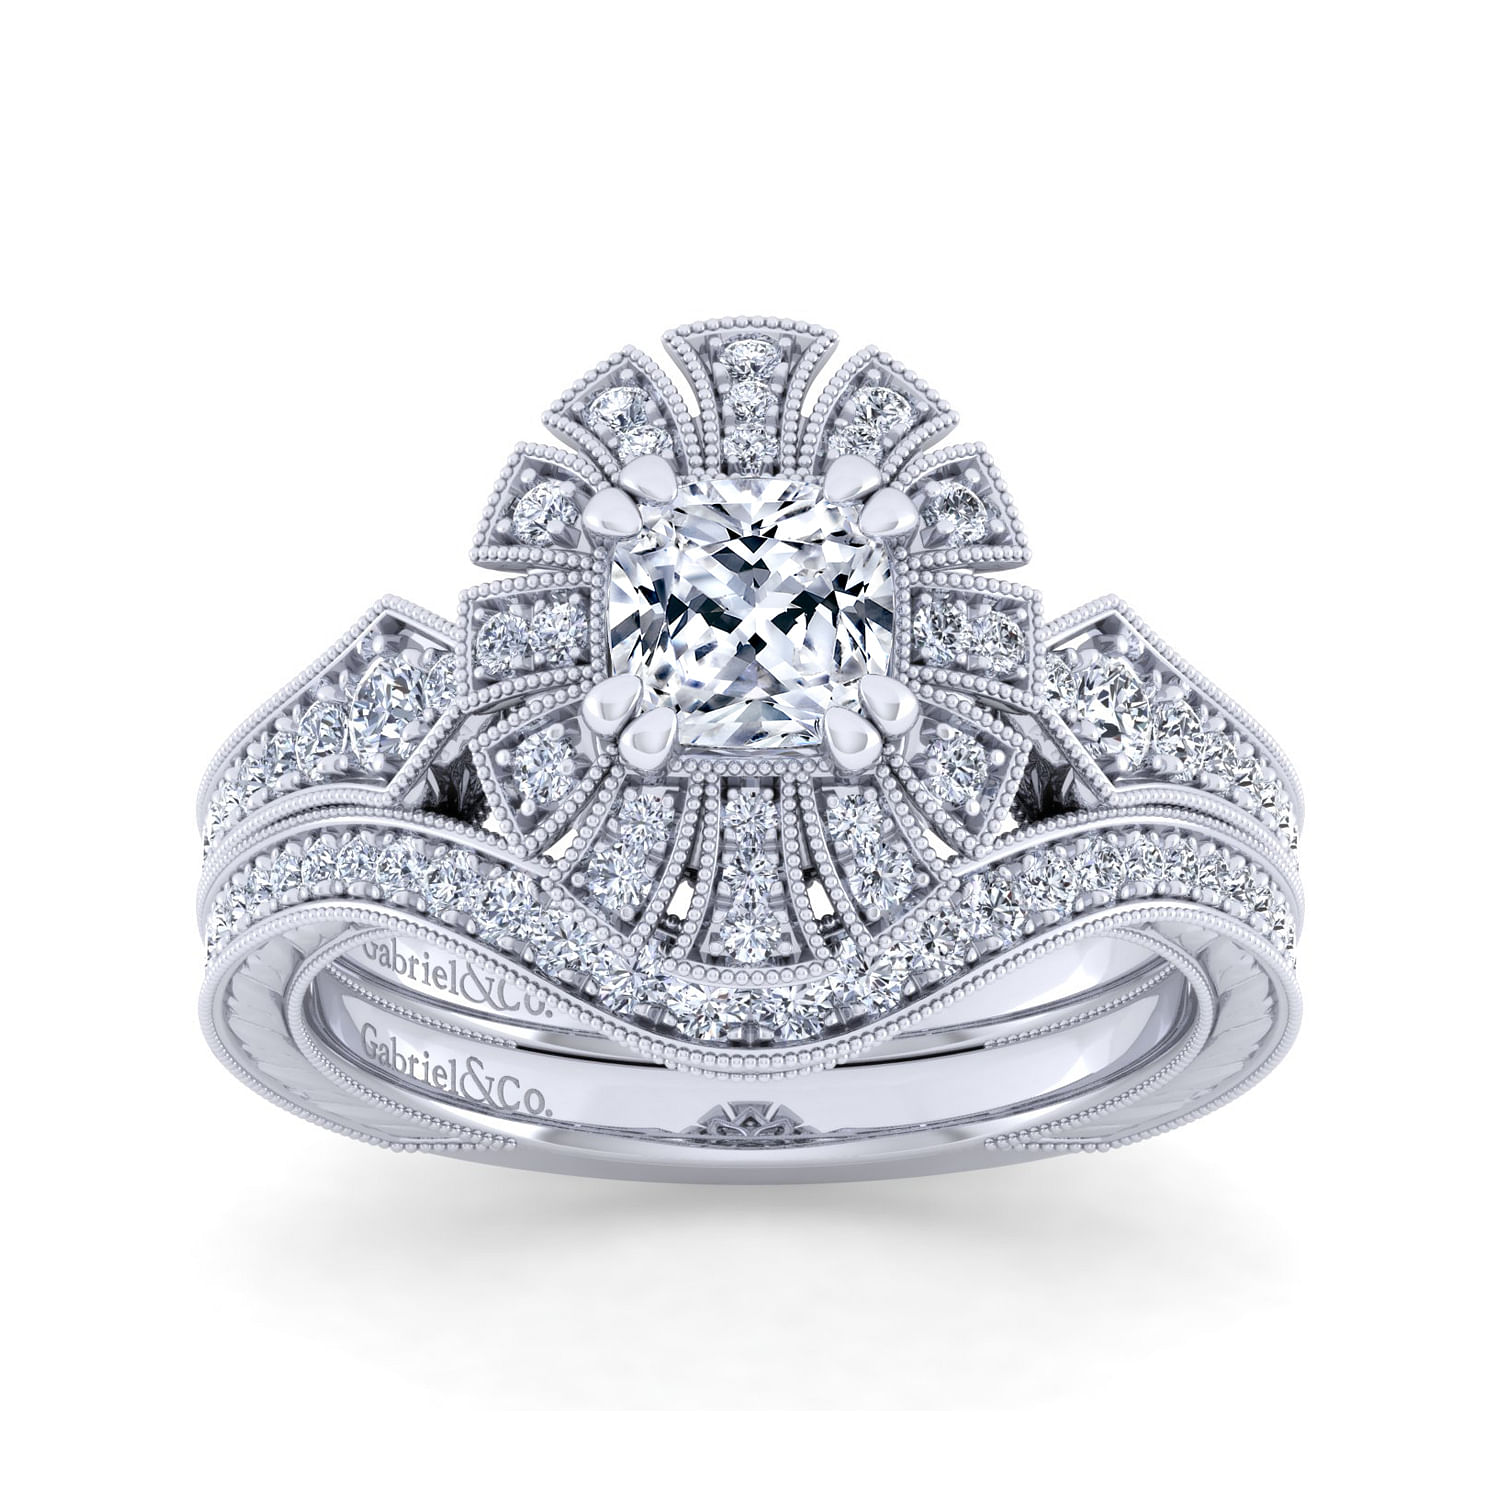 Unique 14K White Gold Art Deco Cushion Cut Halo Diamond Engagement Ring